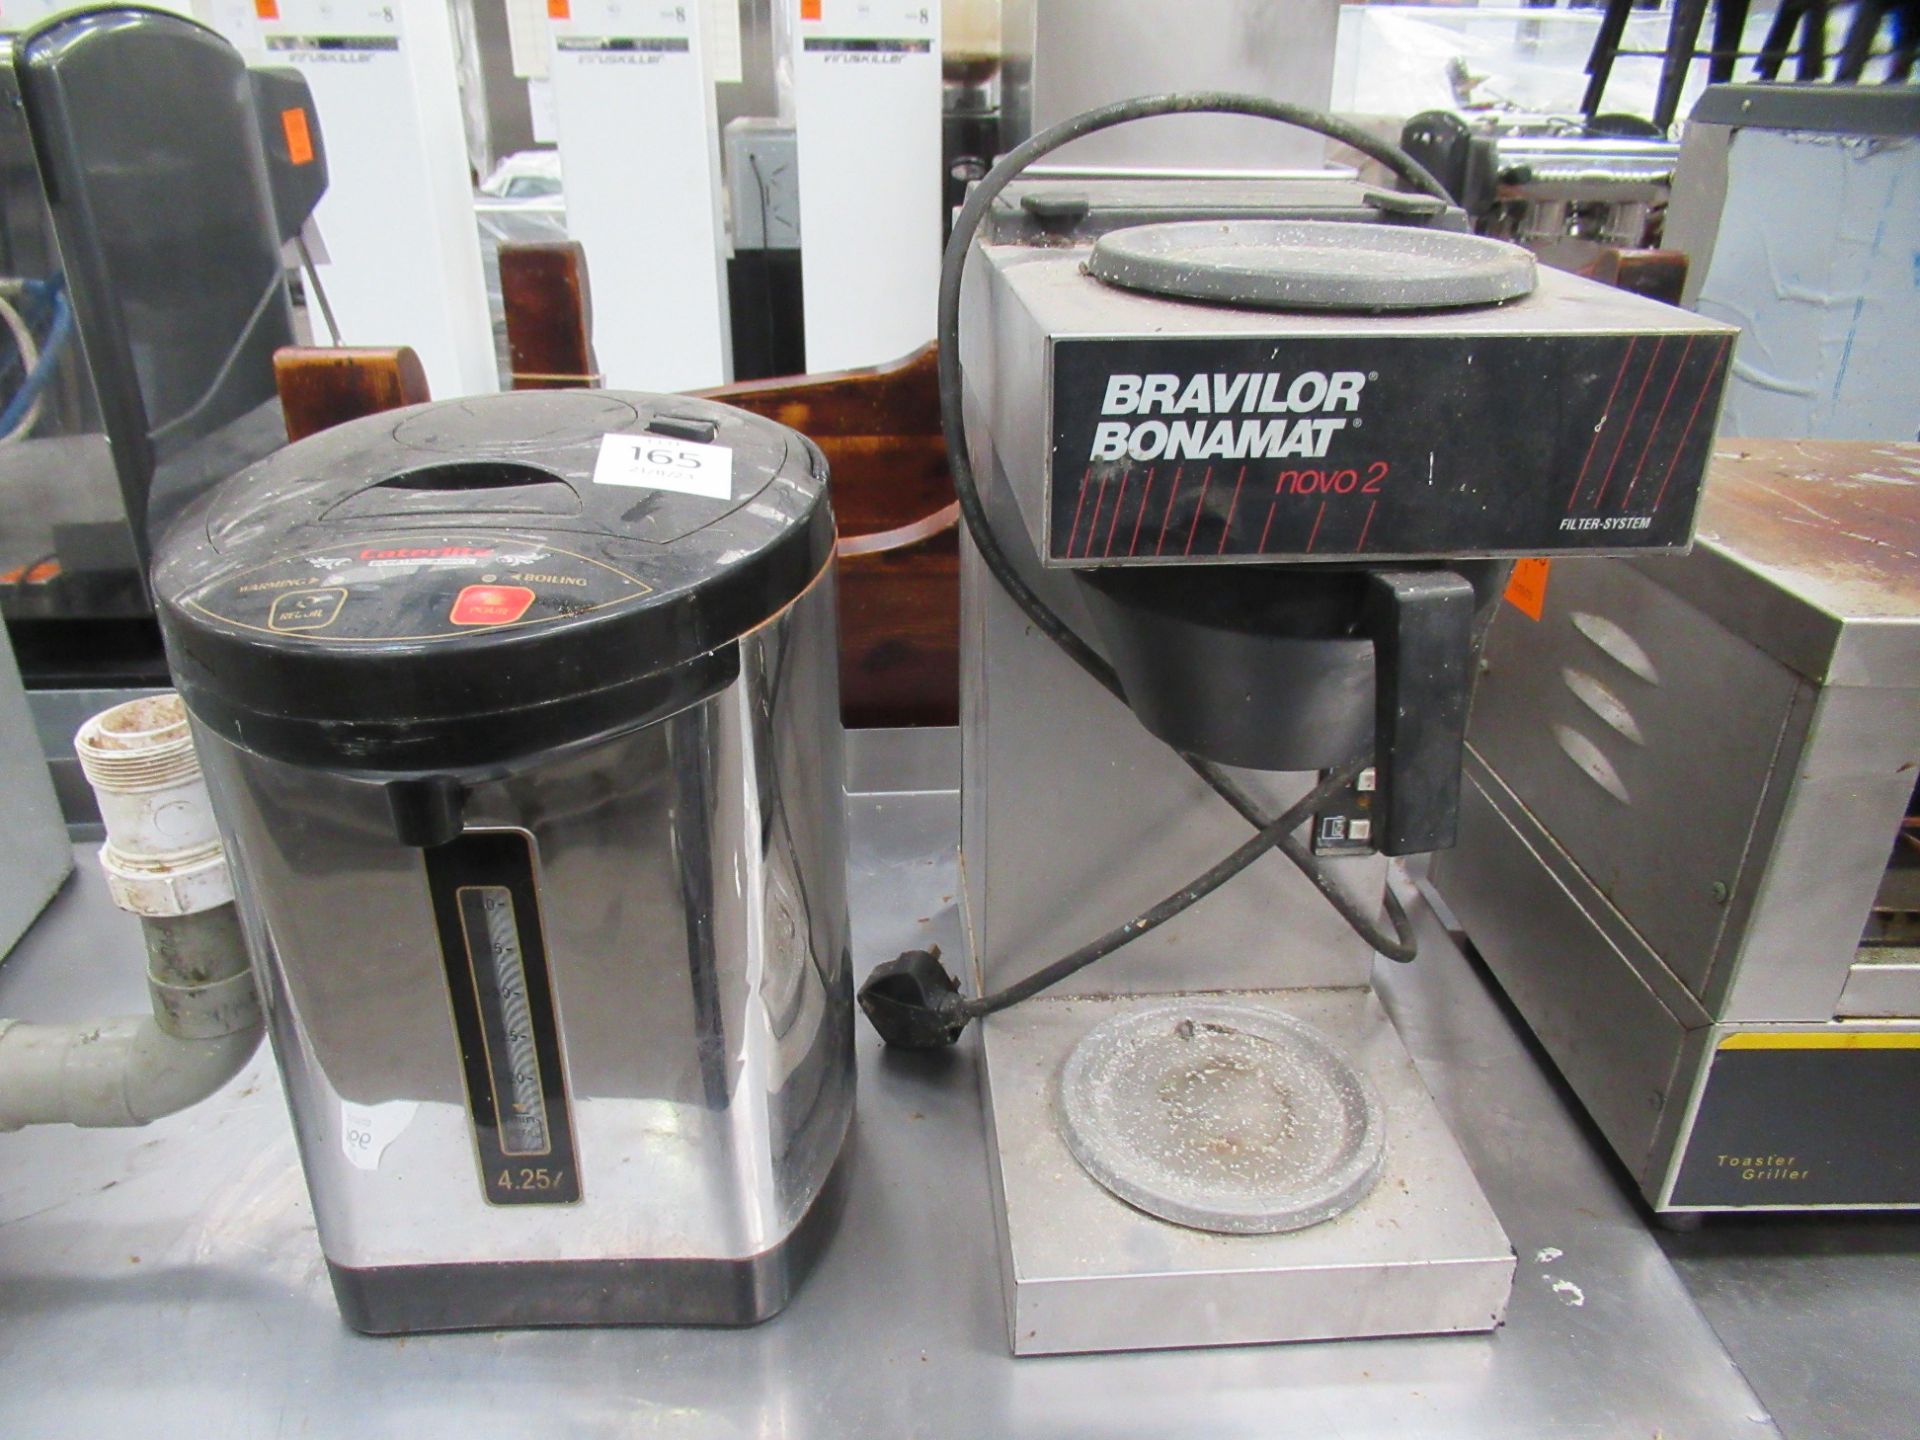 Bravilor Bonamat Novo2 Coffee Machine & a Caterlite 4.25L Water Boiler